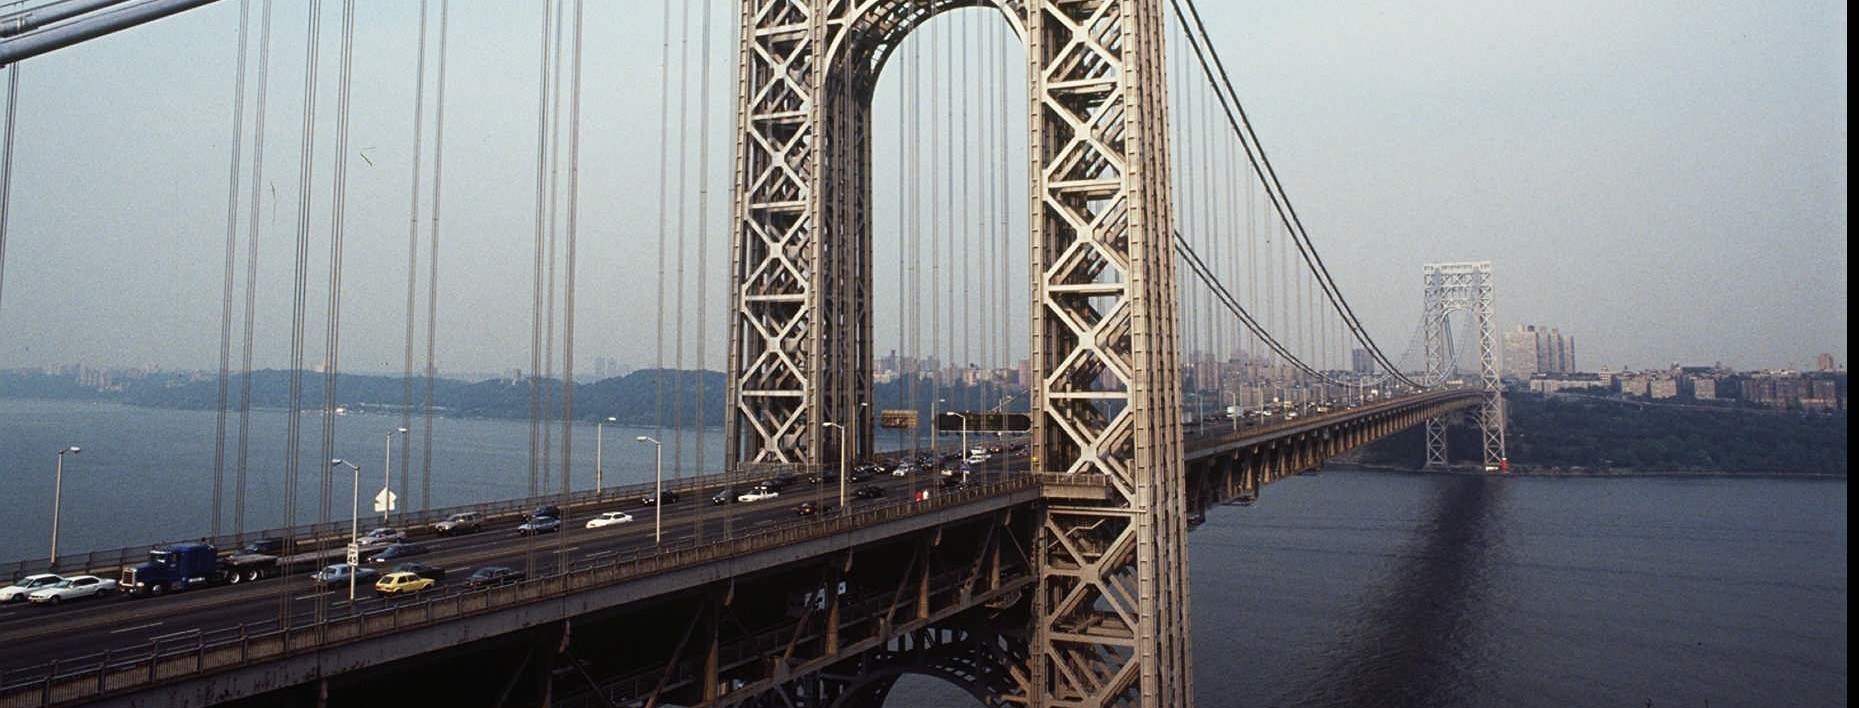 Photo of the George Washington Bridge